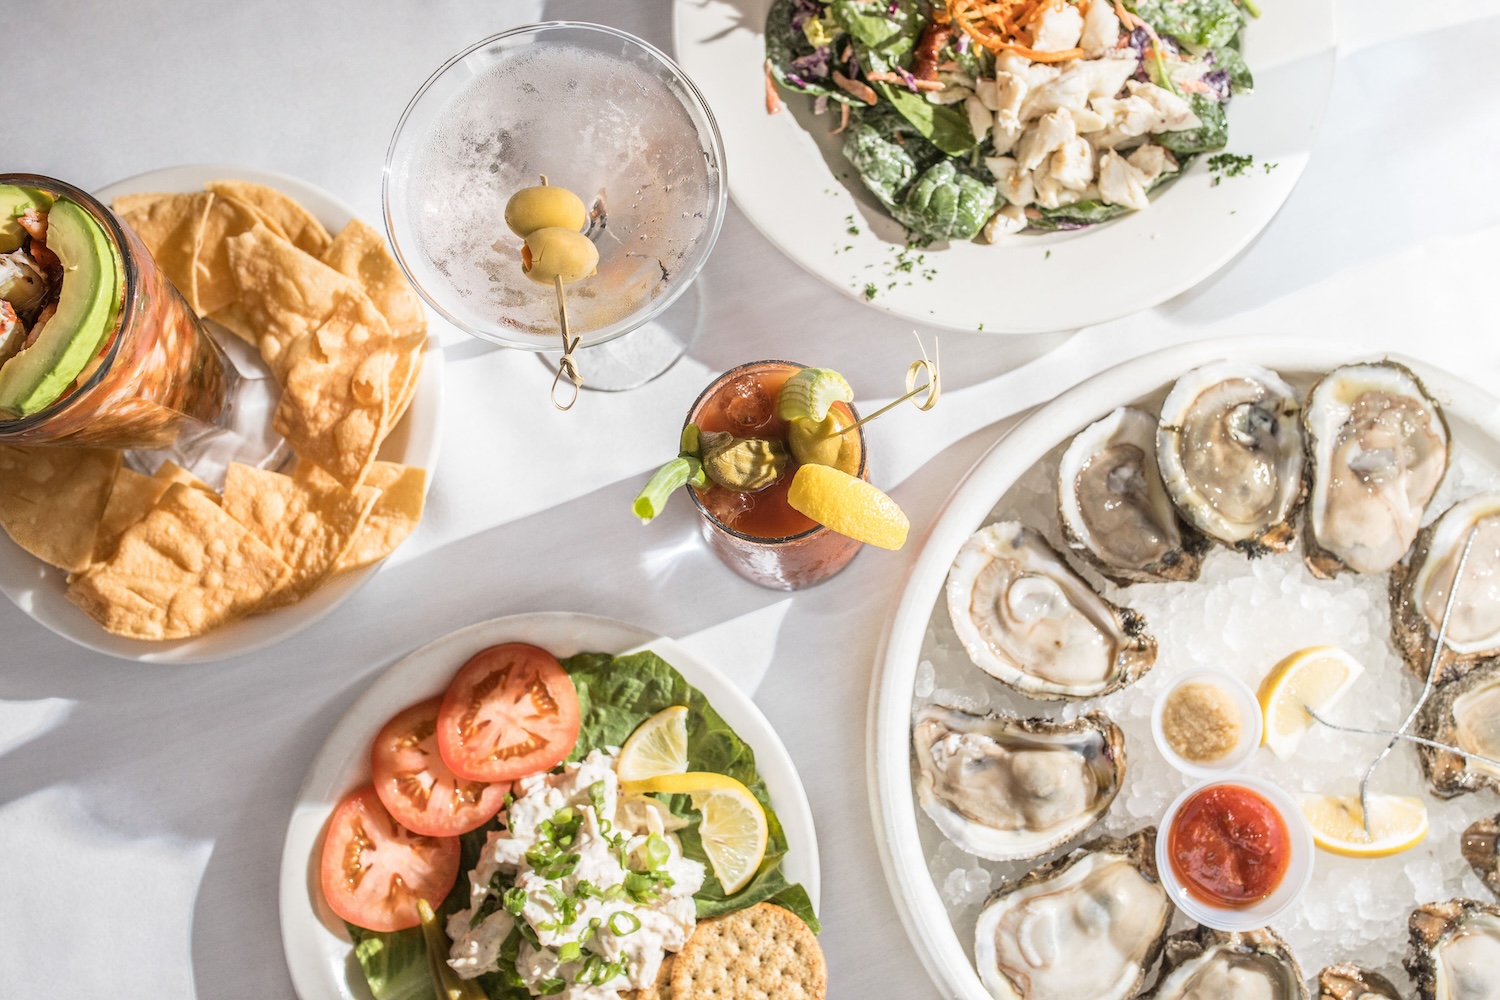 Eugene's is a bonafide neighborhood gem lauded for its menu of Gulf seafood comfort eats